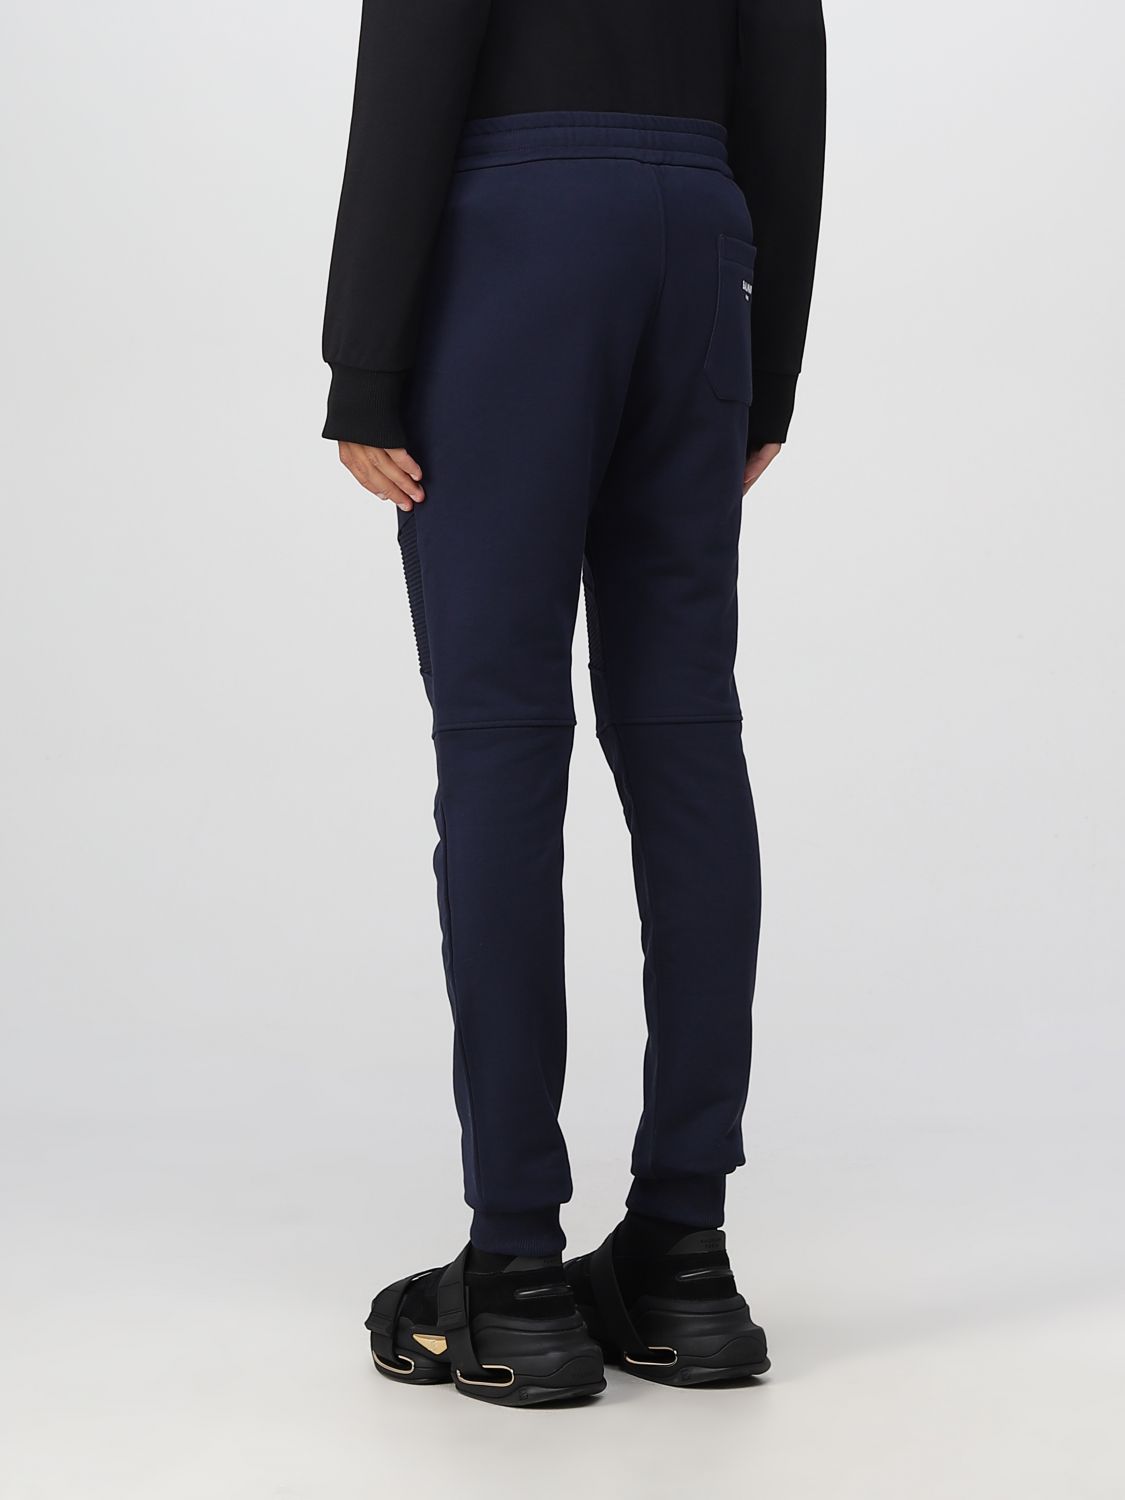 BALMAIN: pants for man - Blue | Balmain pants YH1OB000BB04 online on ...